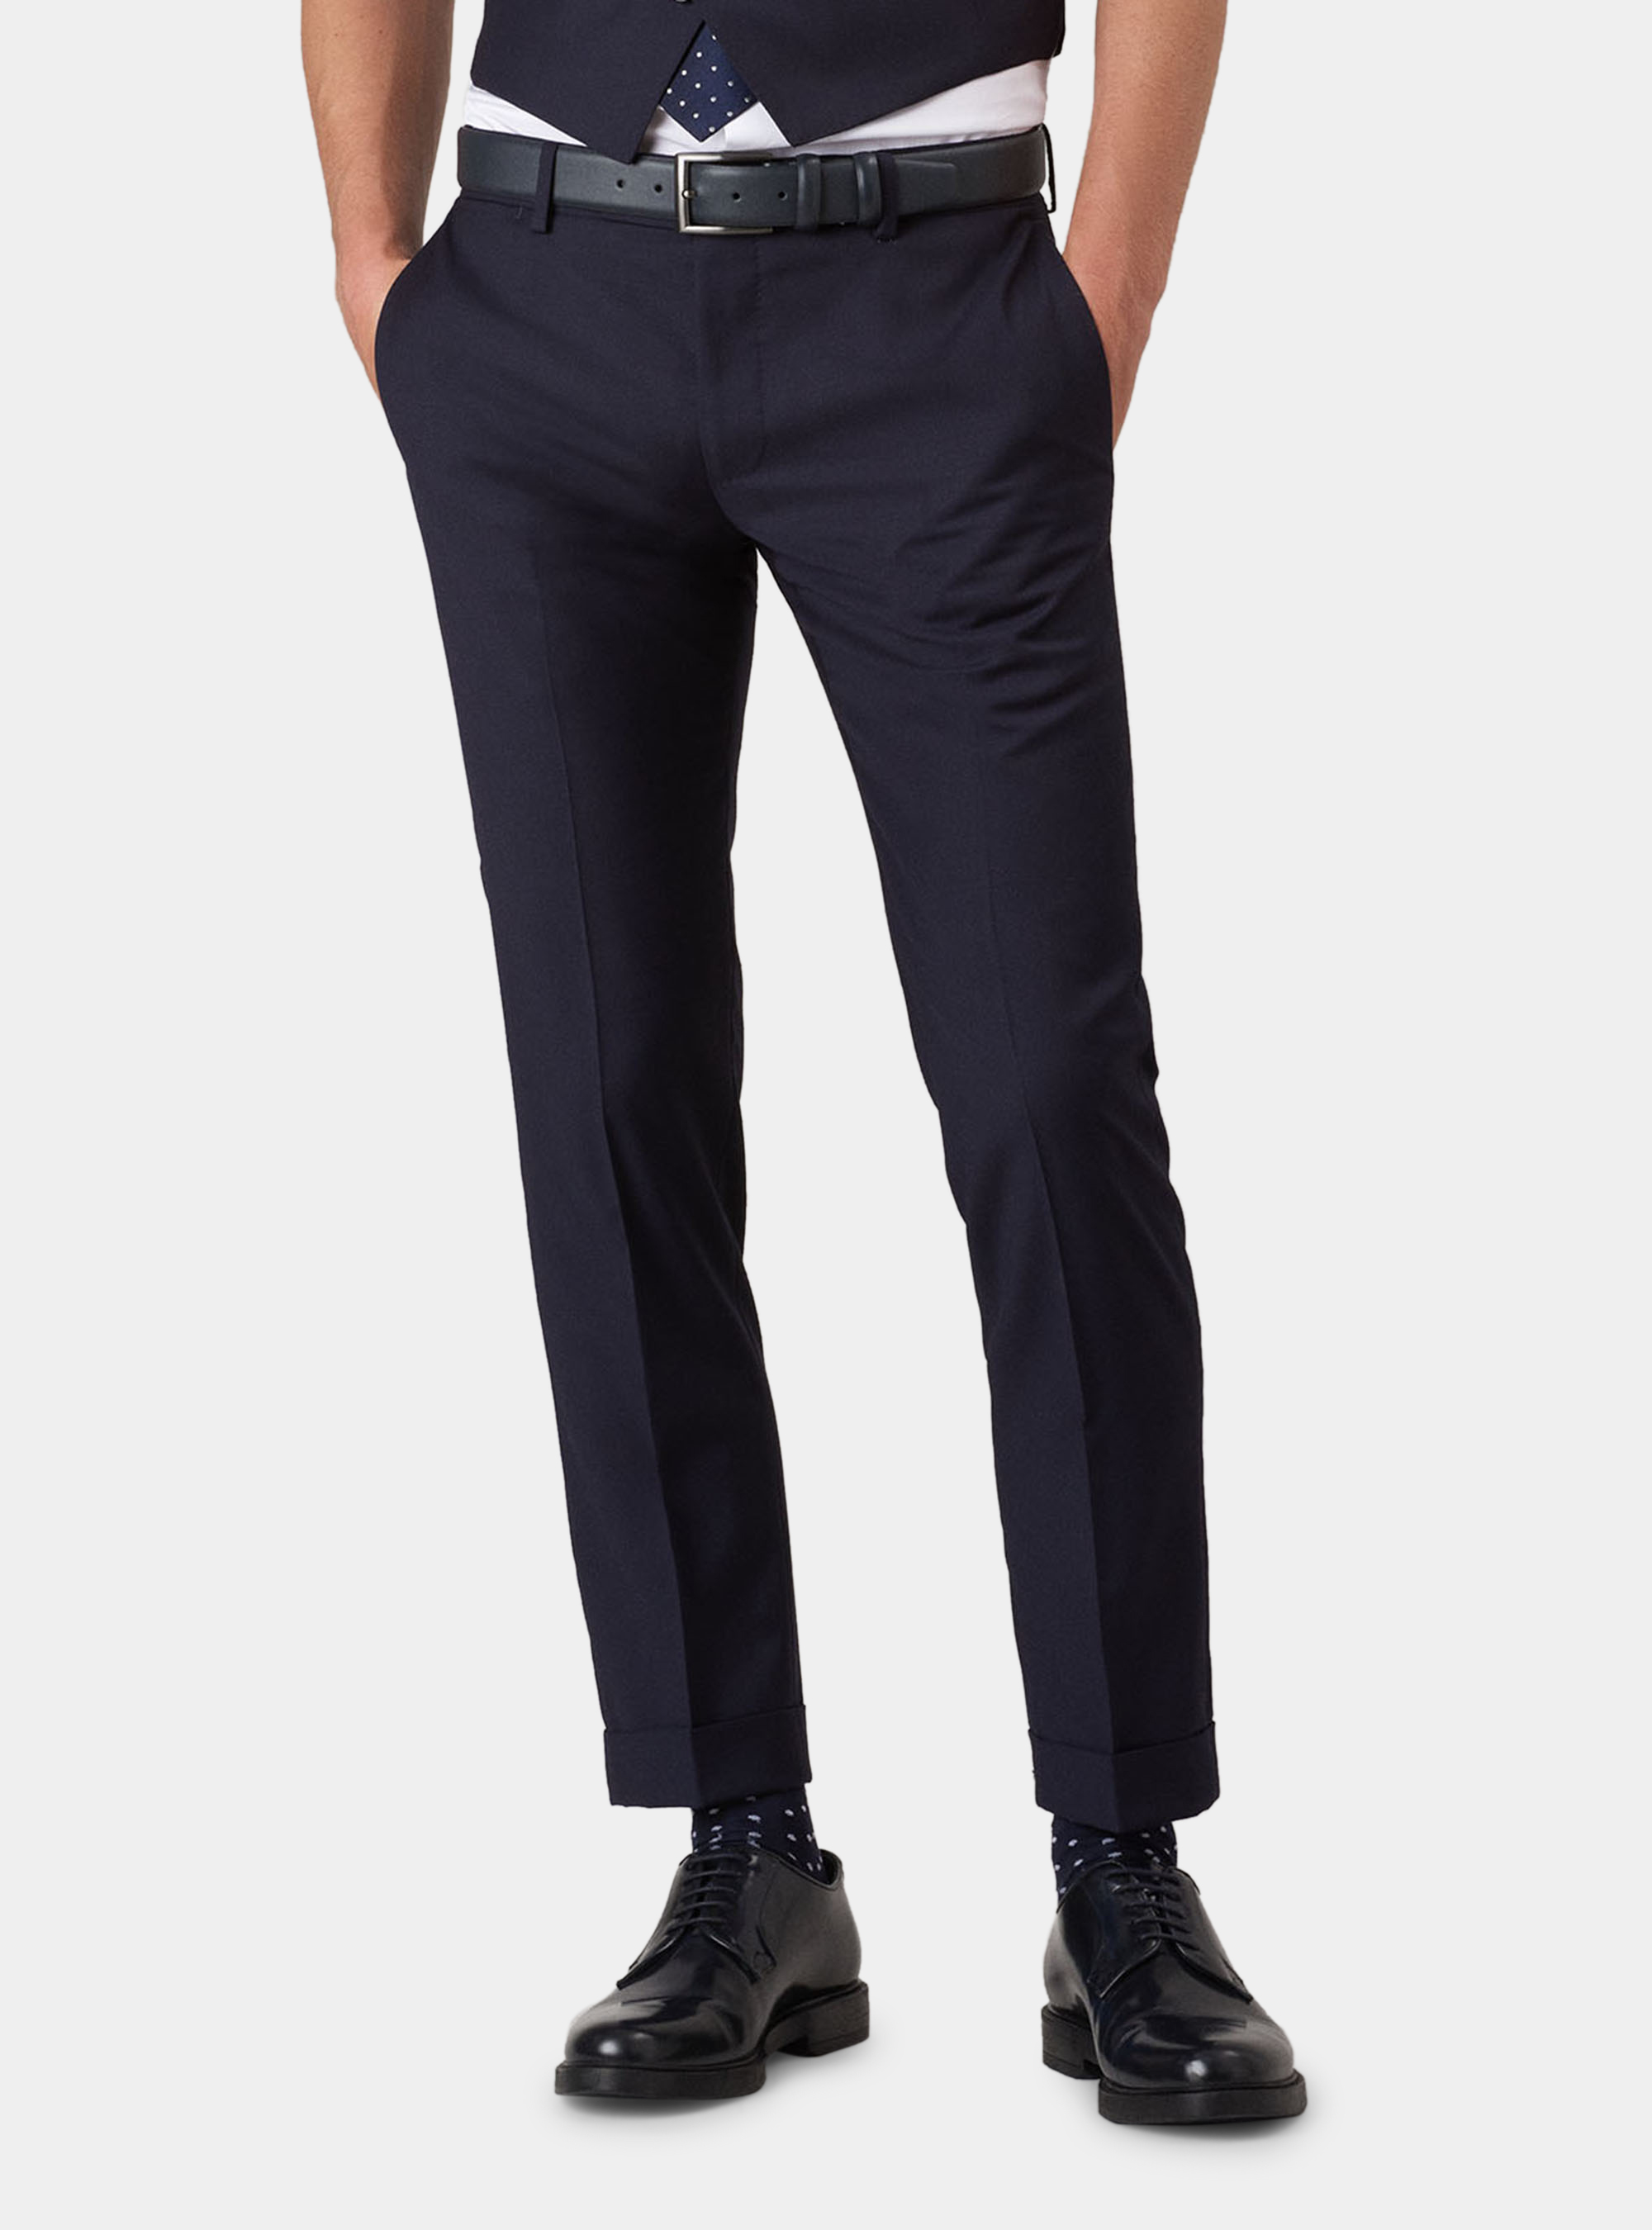 Gutteridge - Pantaloni per abito drop 4 in fresco lana, Unisex, Blu Navy, Taglia: 54